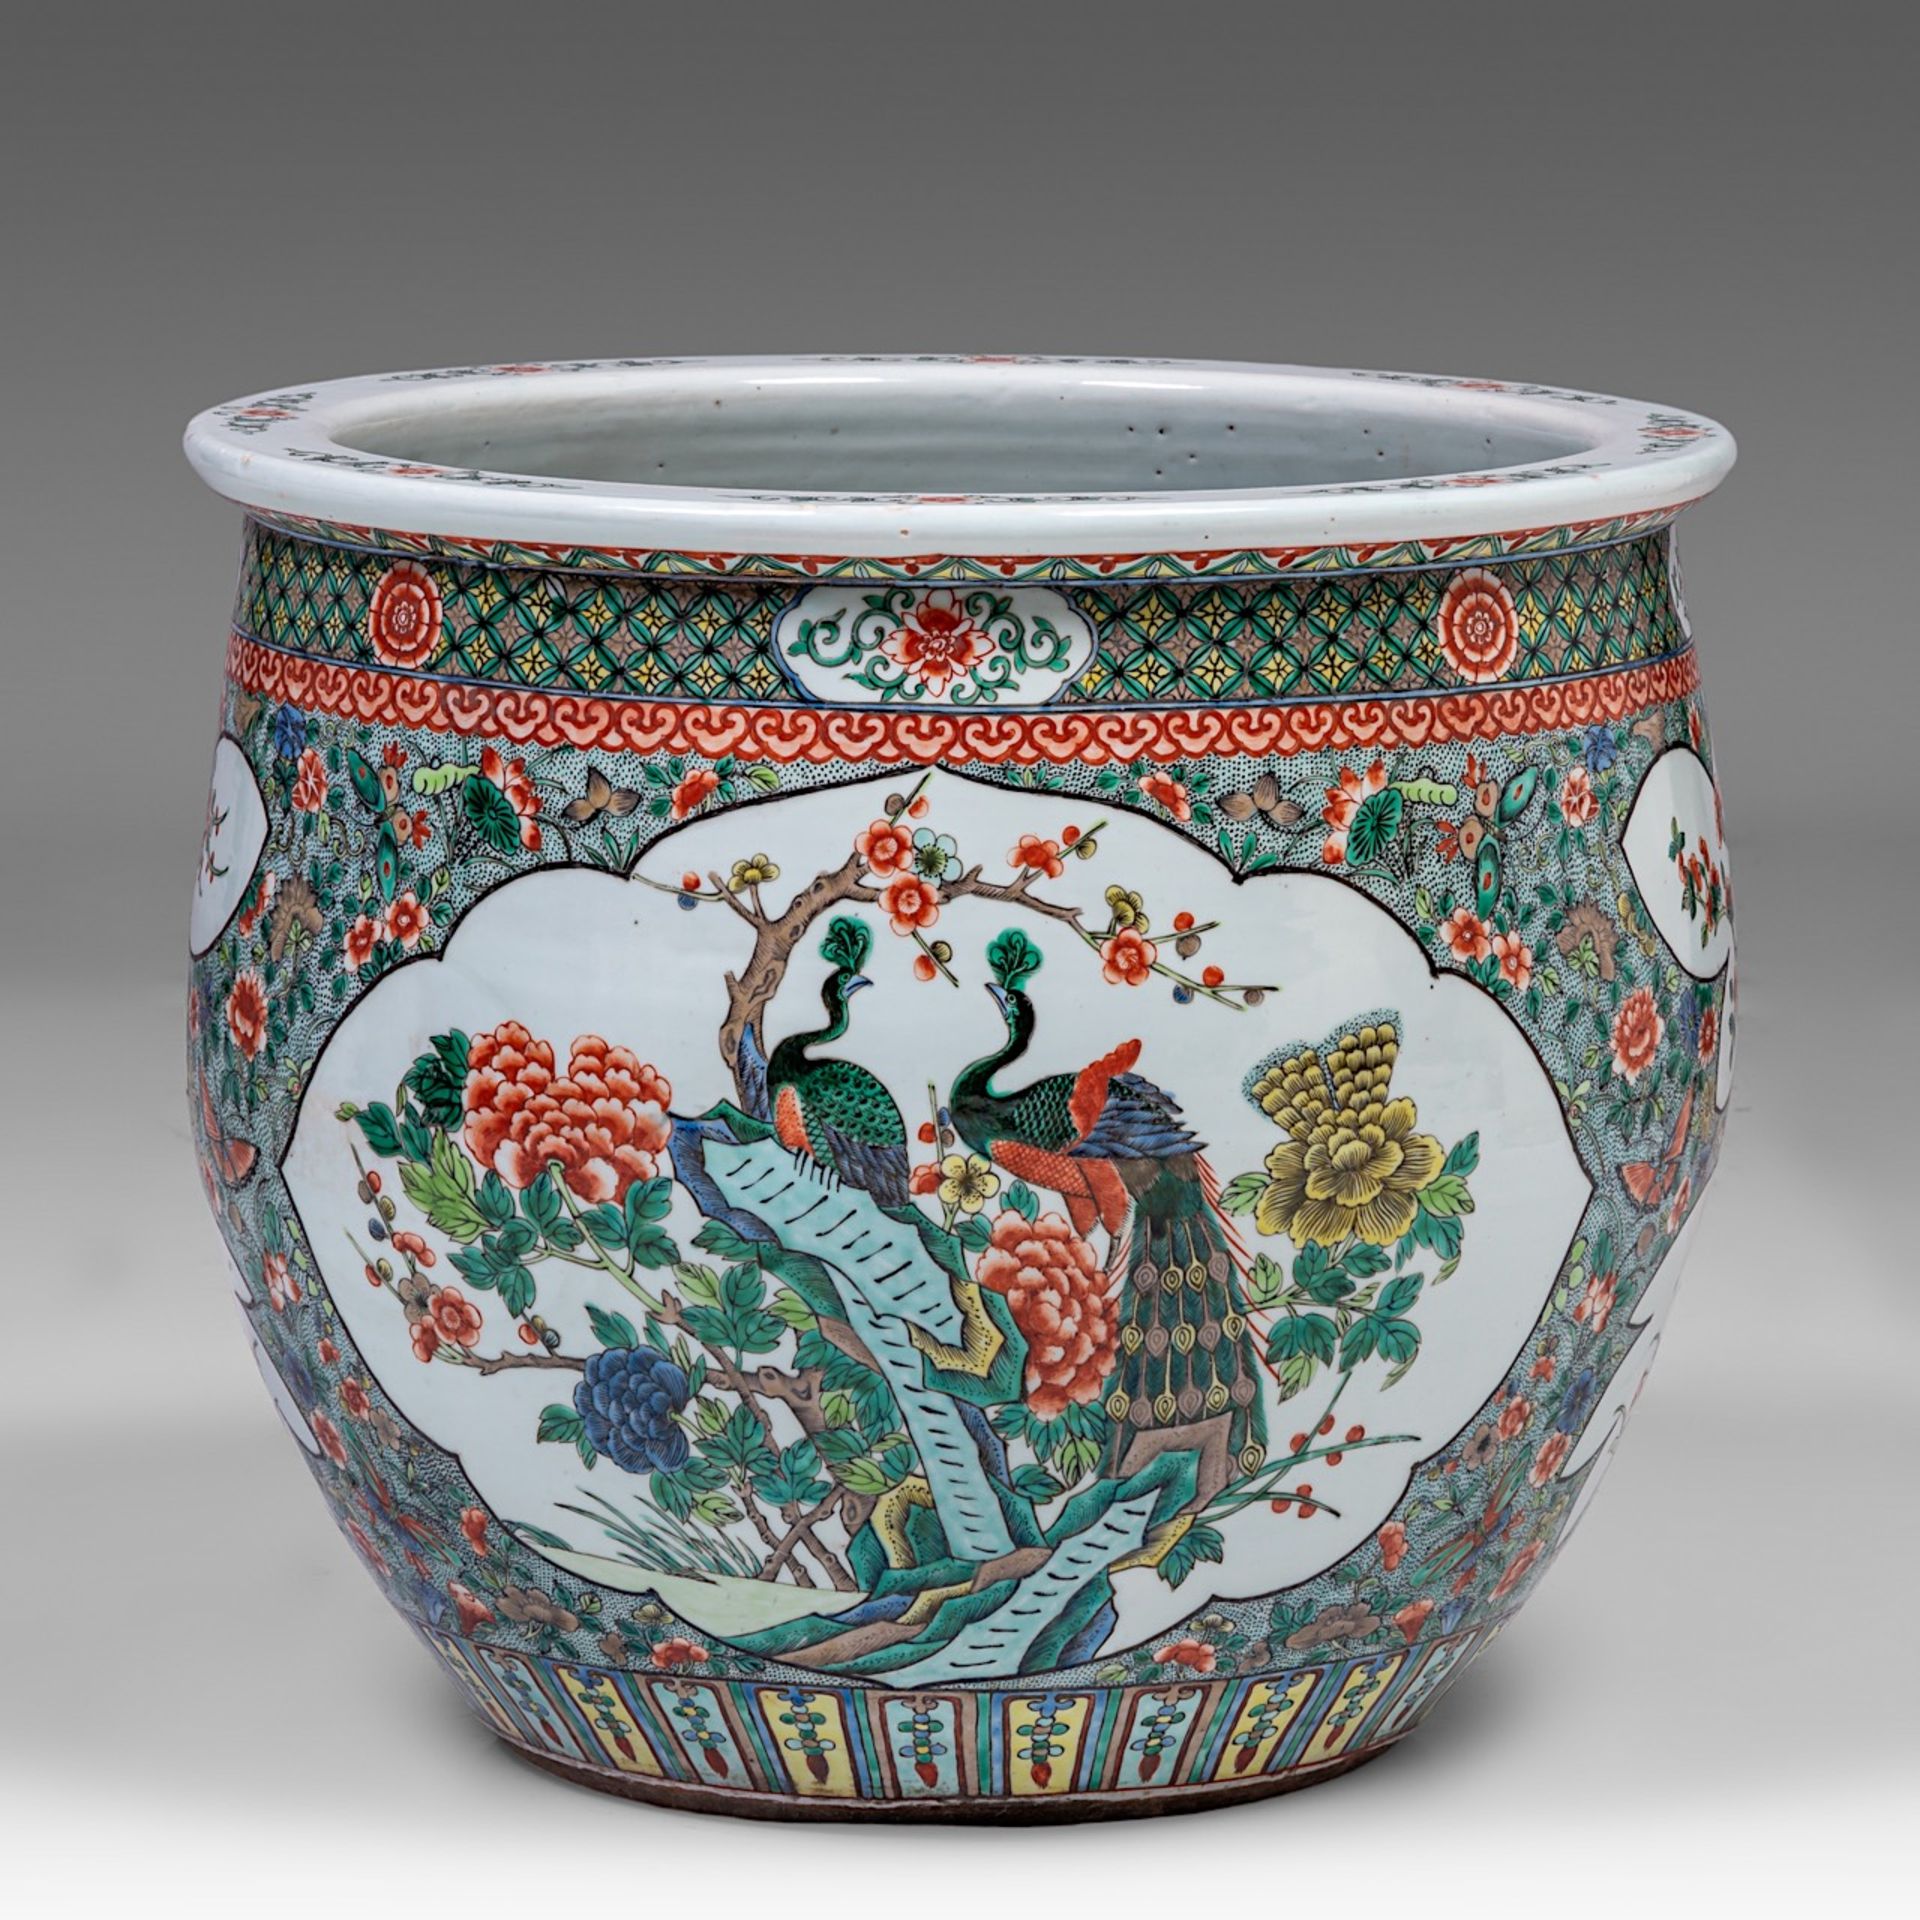 A large Chinese famille verte 'Birds in flower garden' fish bowl, late 19thC/Republic period, H 46 - - Bild 2 aus 7